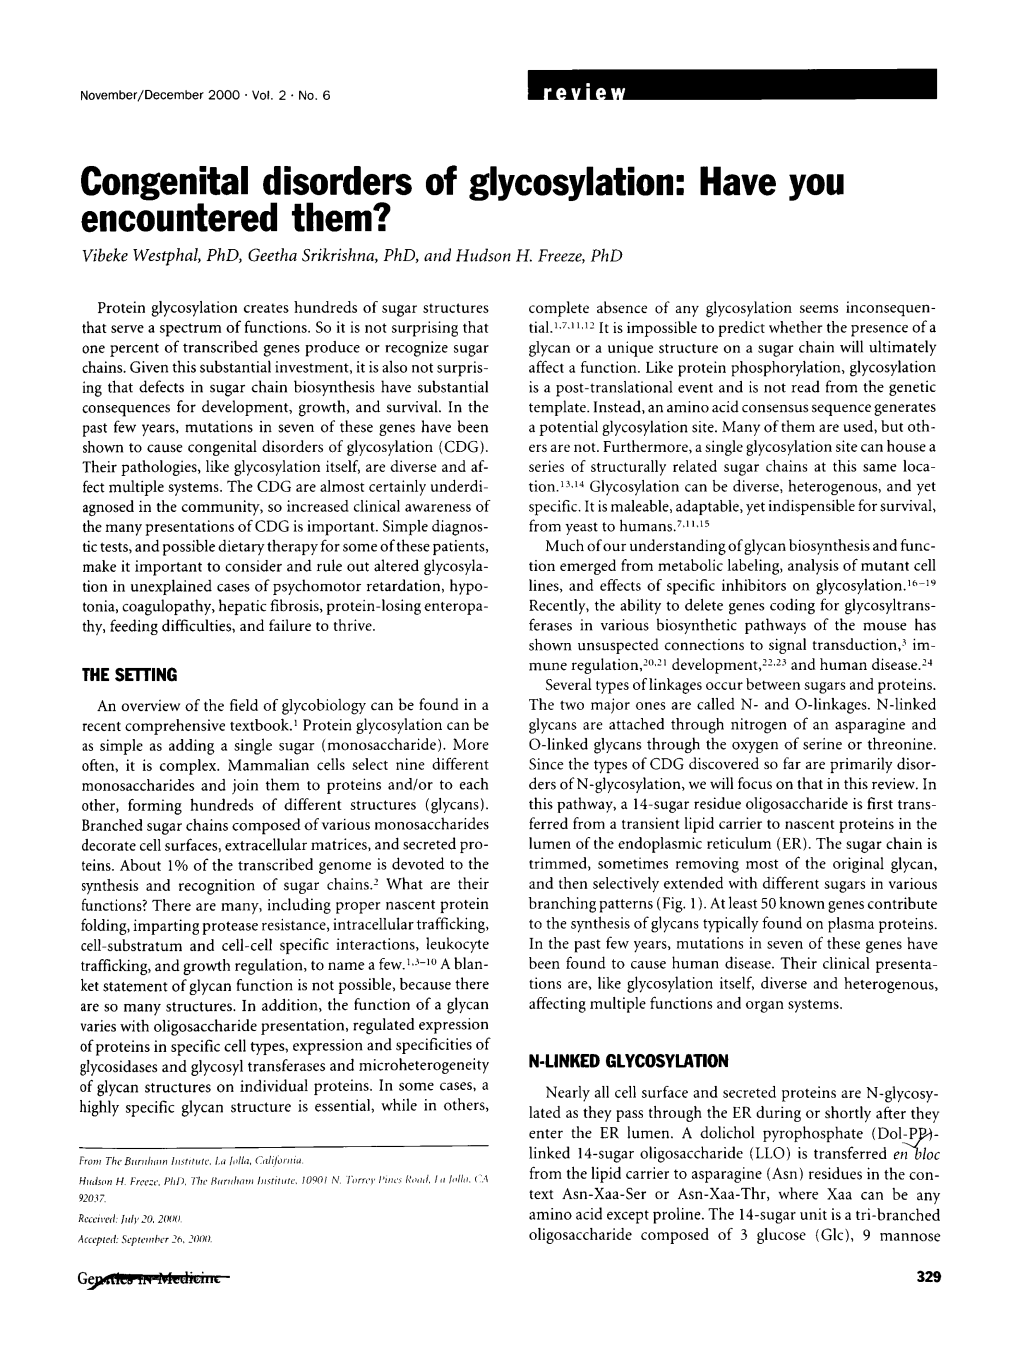 Congenital Disorders of Glycosylation: Have You Encountered Them? Vibeke Westphal, Phd, Geetha Srikrishna, Phd, and Hudson H